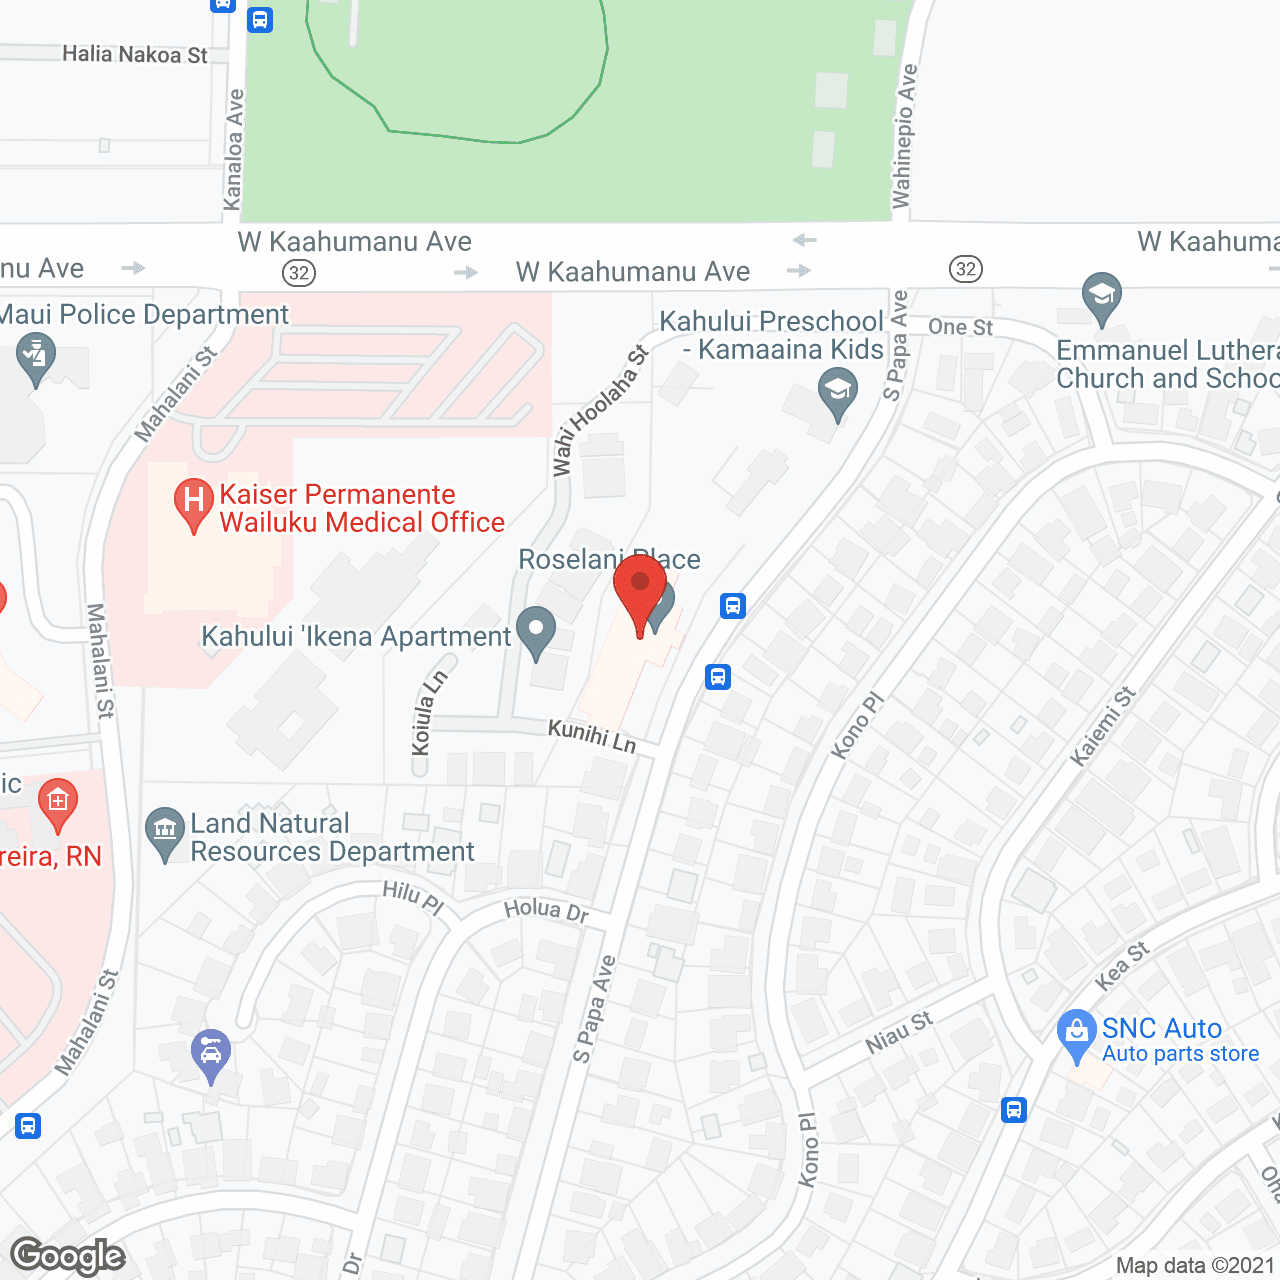 Roselani Place in google map